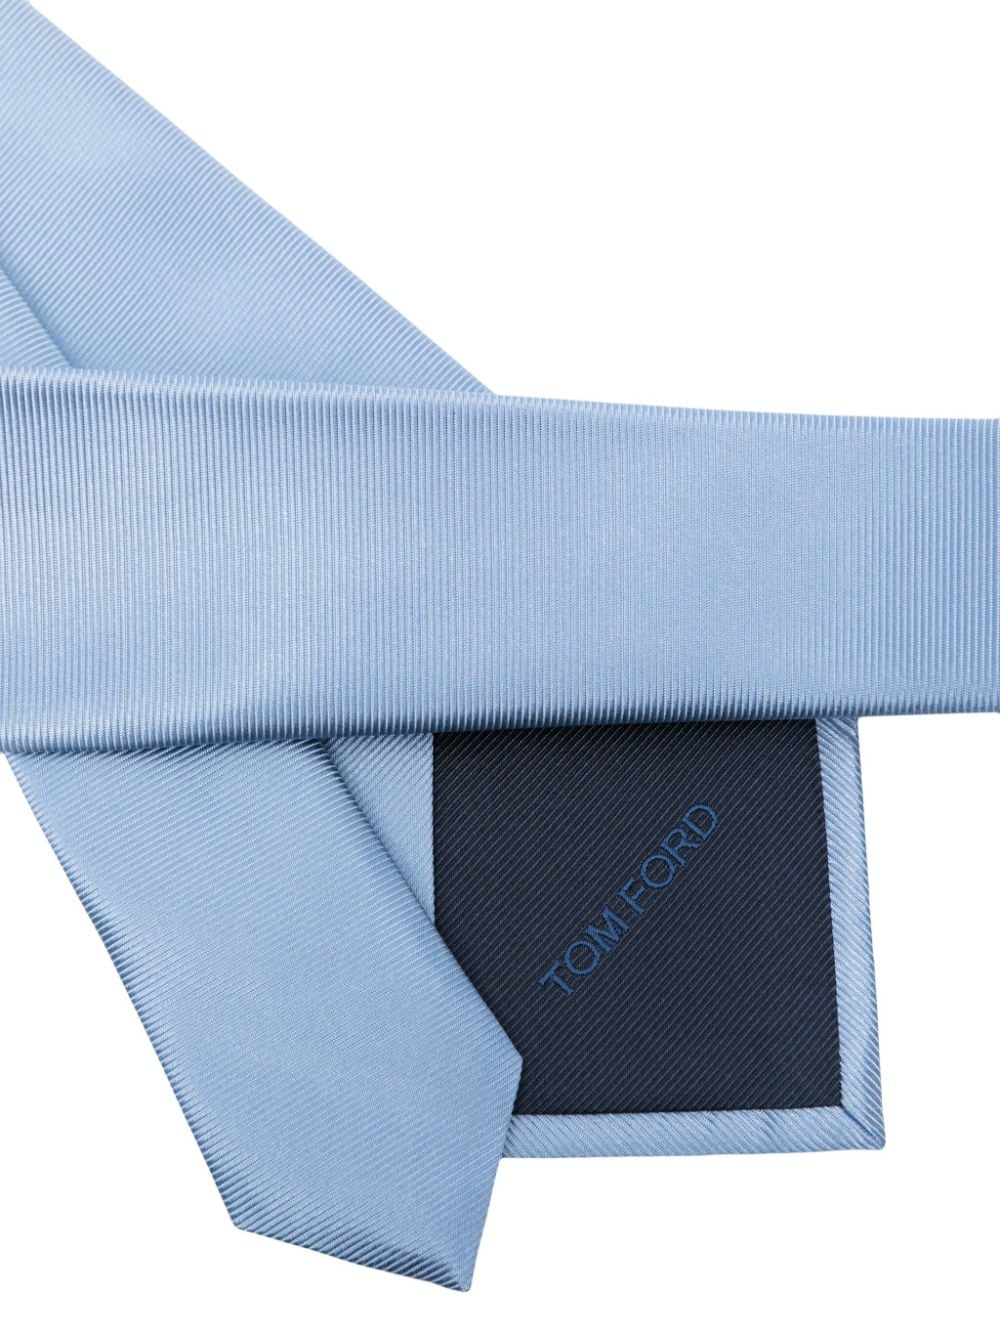 Image 2 of TOM FORD stripe-jacquard silk tie